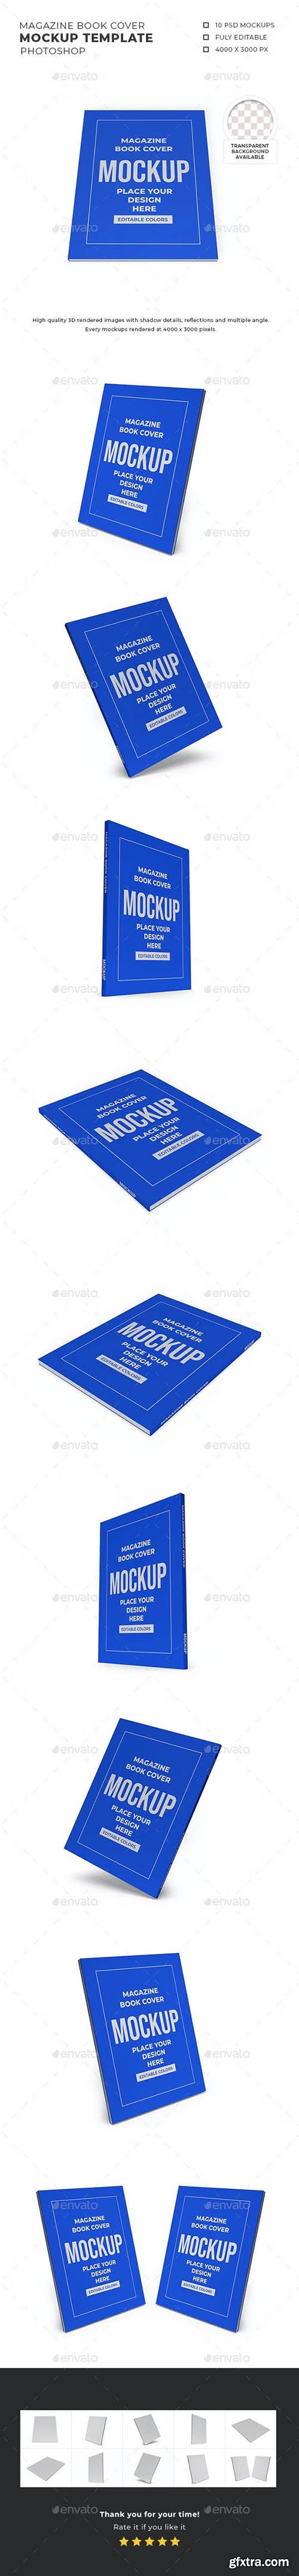 GraphicRiver - Magazine Book Cover Mockup Template Set 36610777